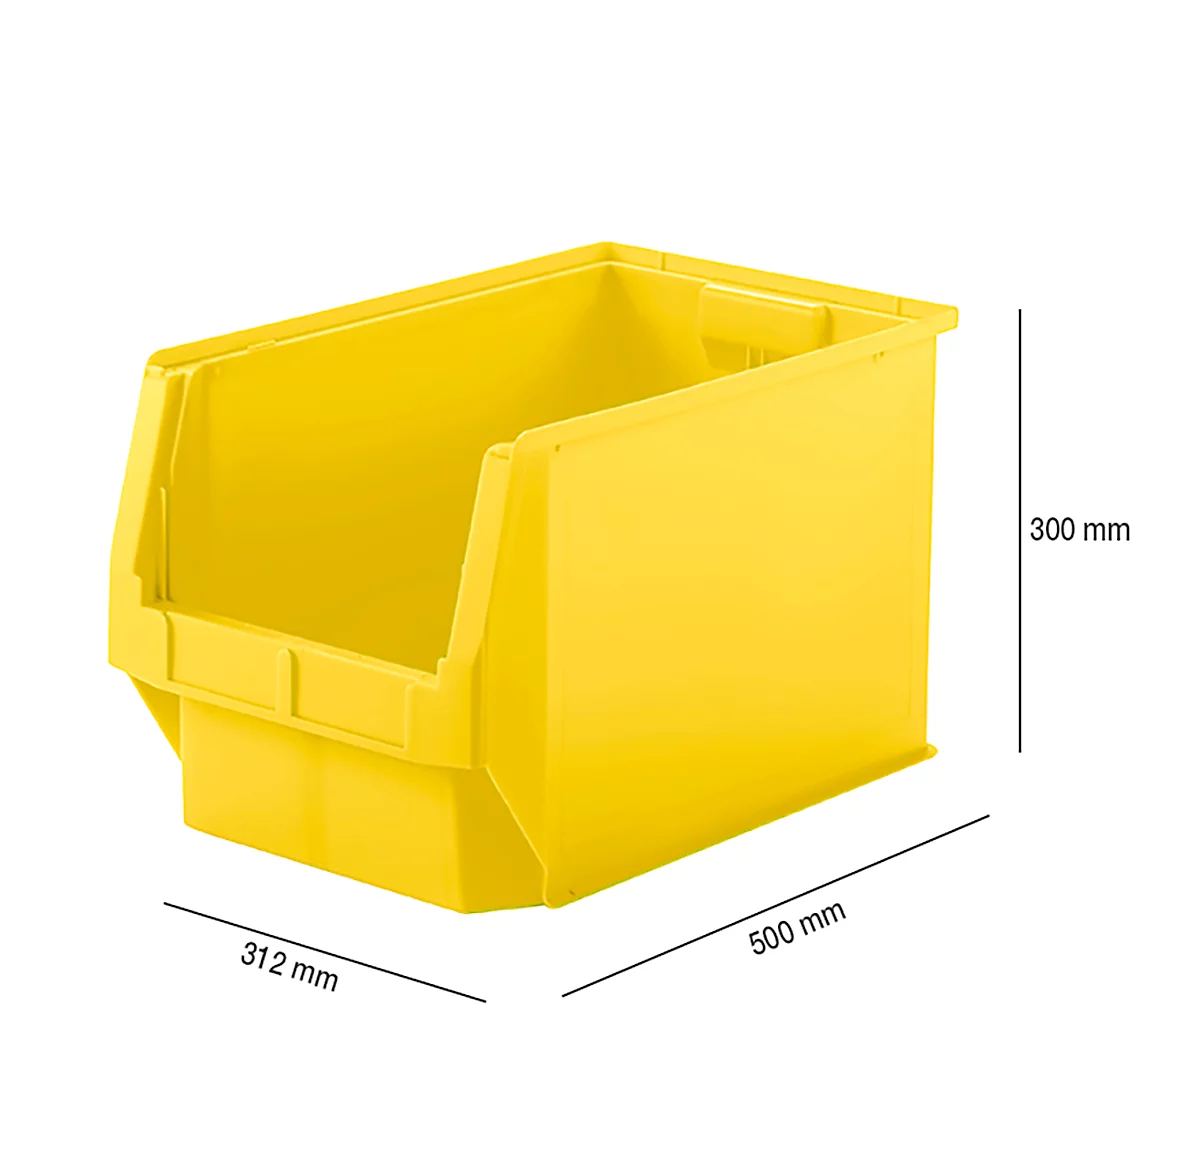 SSI Schäfer LF 533 caja de almacenaje abierta, polipropileno, L 500 x An 312 x Al 300 mm, 38 l, amarillo